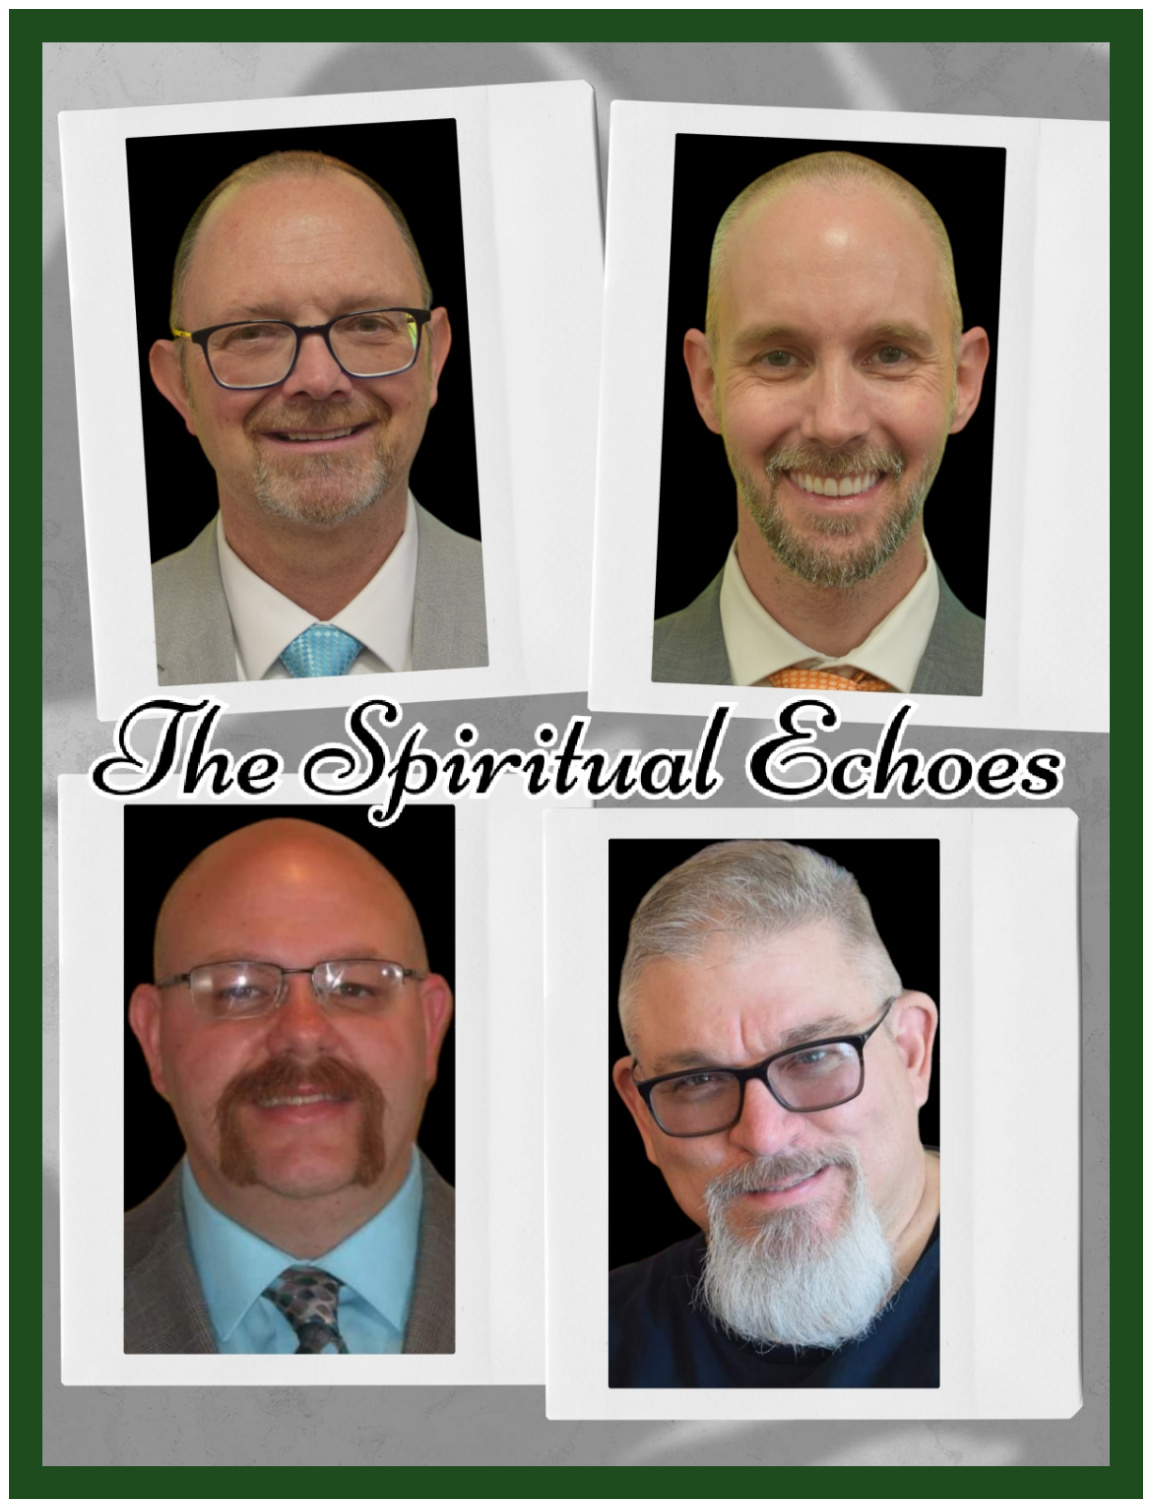 The Spiritual Echoes